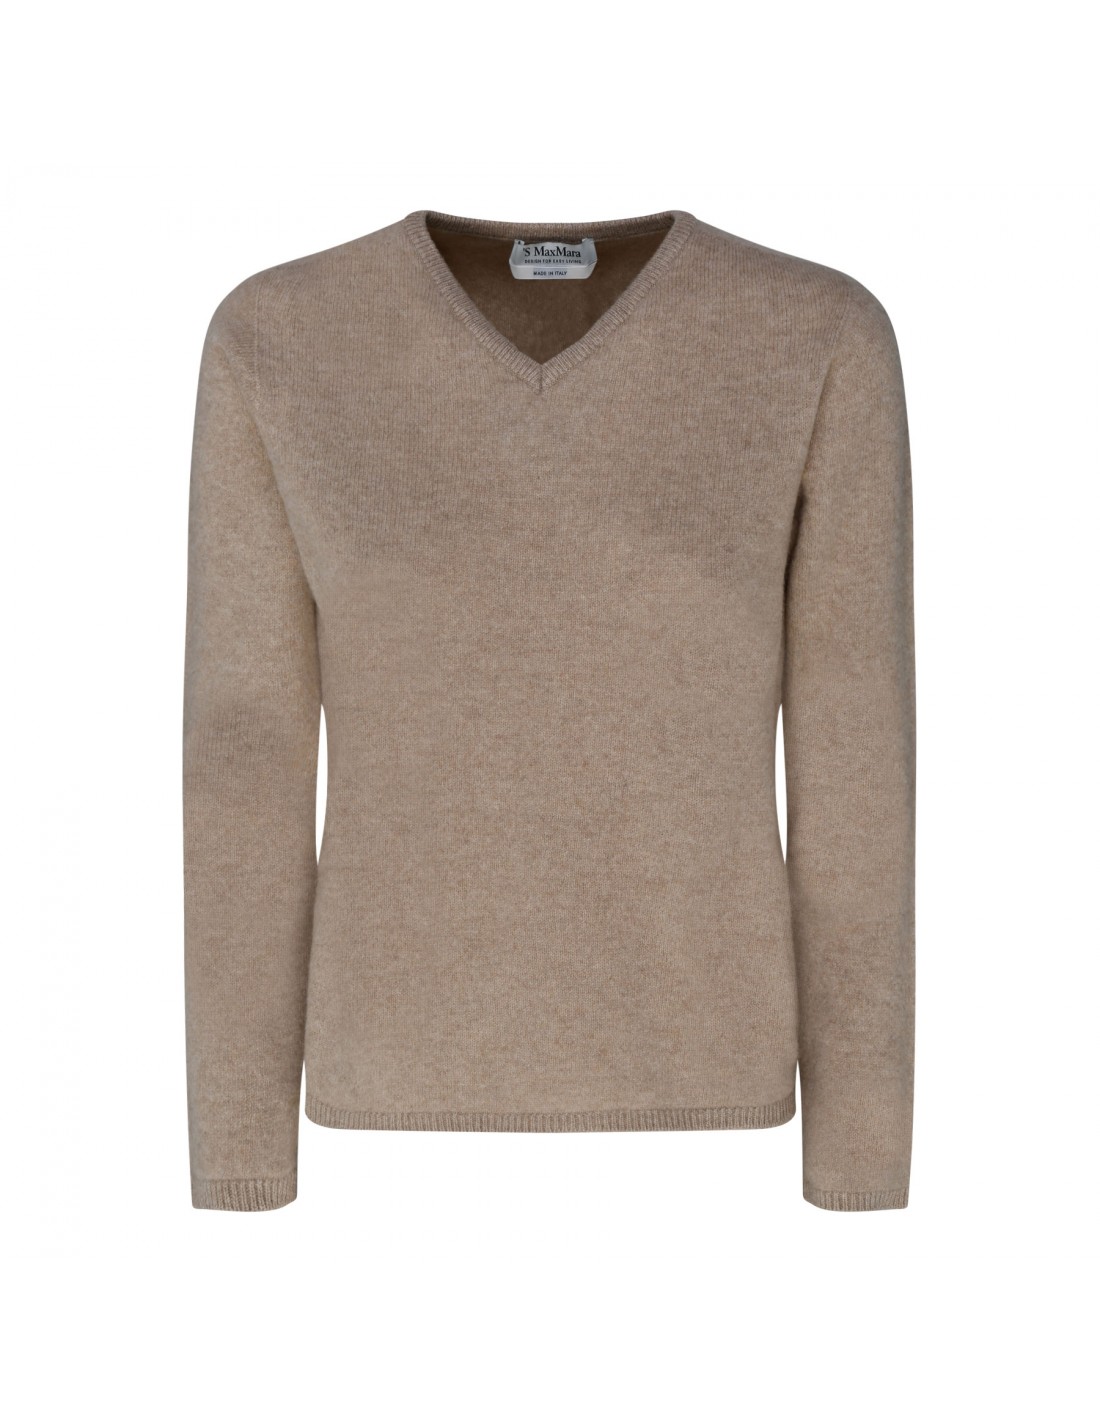 Honey-hue cashmere blend sweater